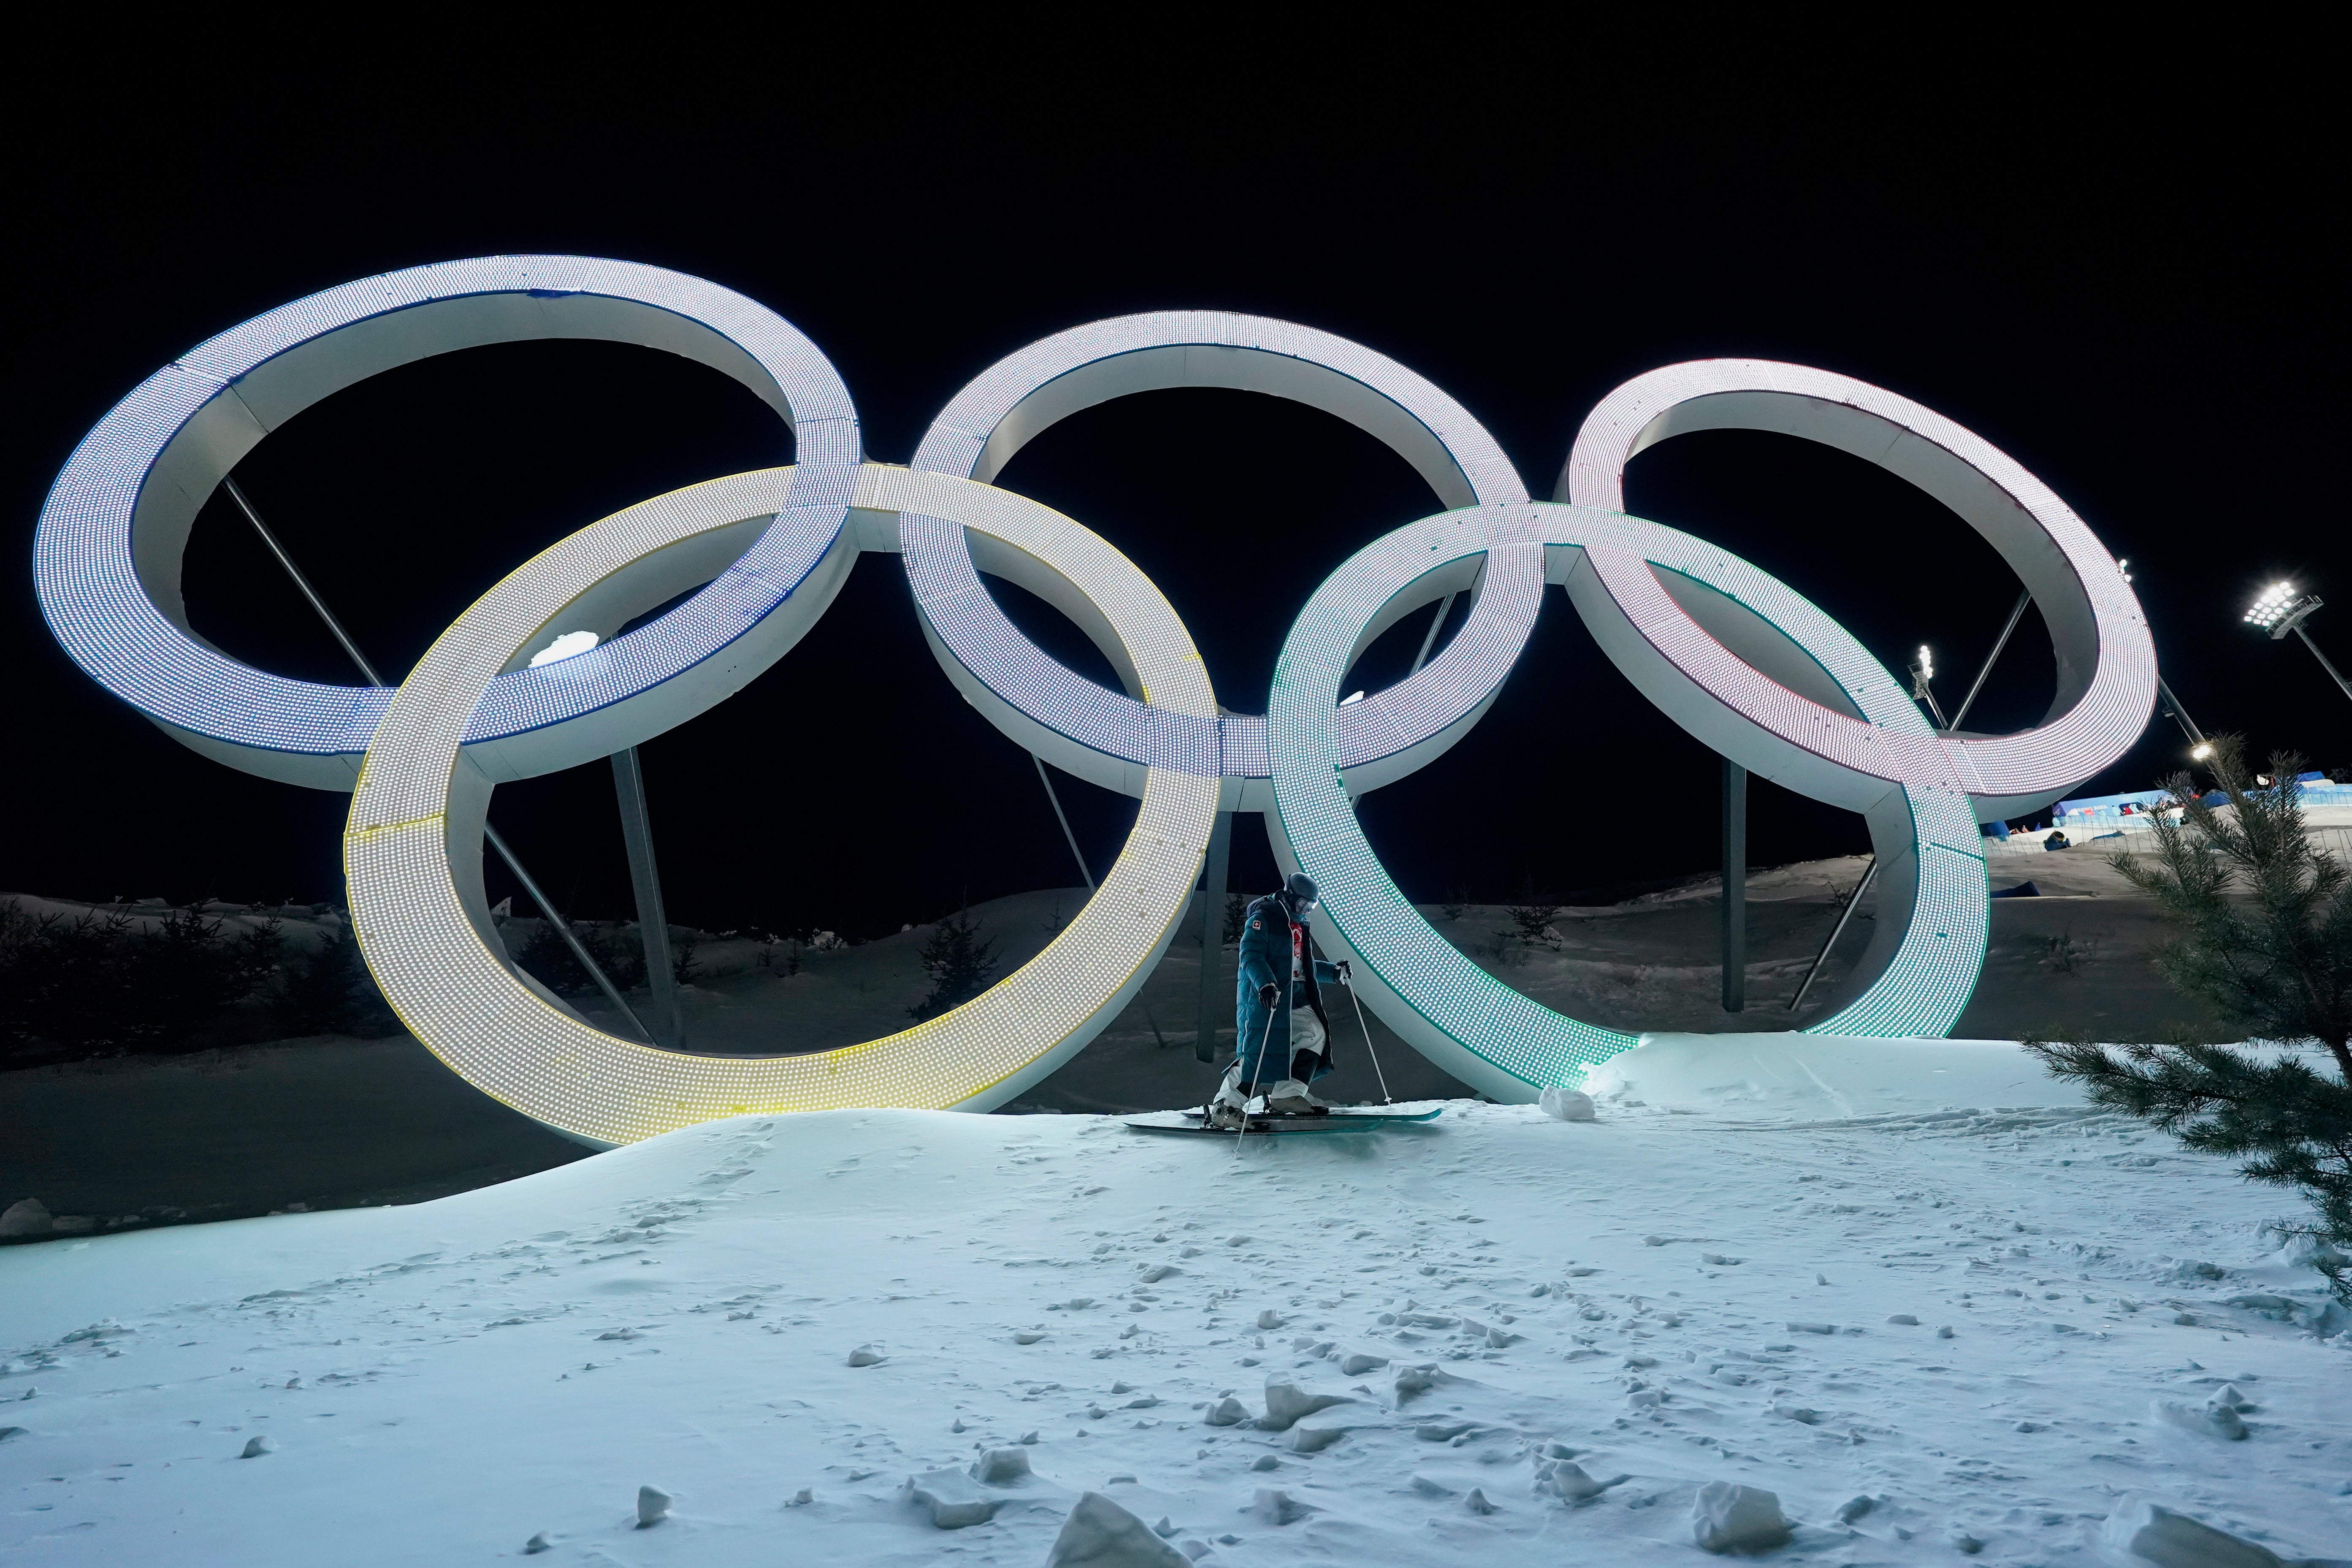 Beijing Olympics Rings Photo Gallery